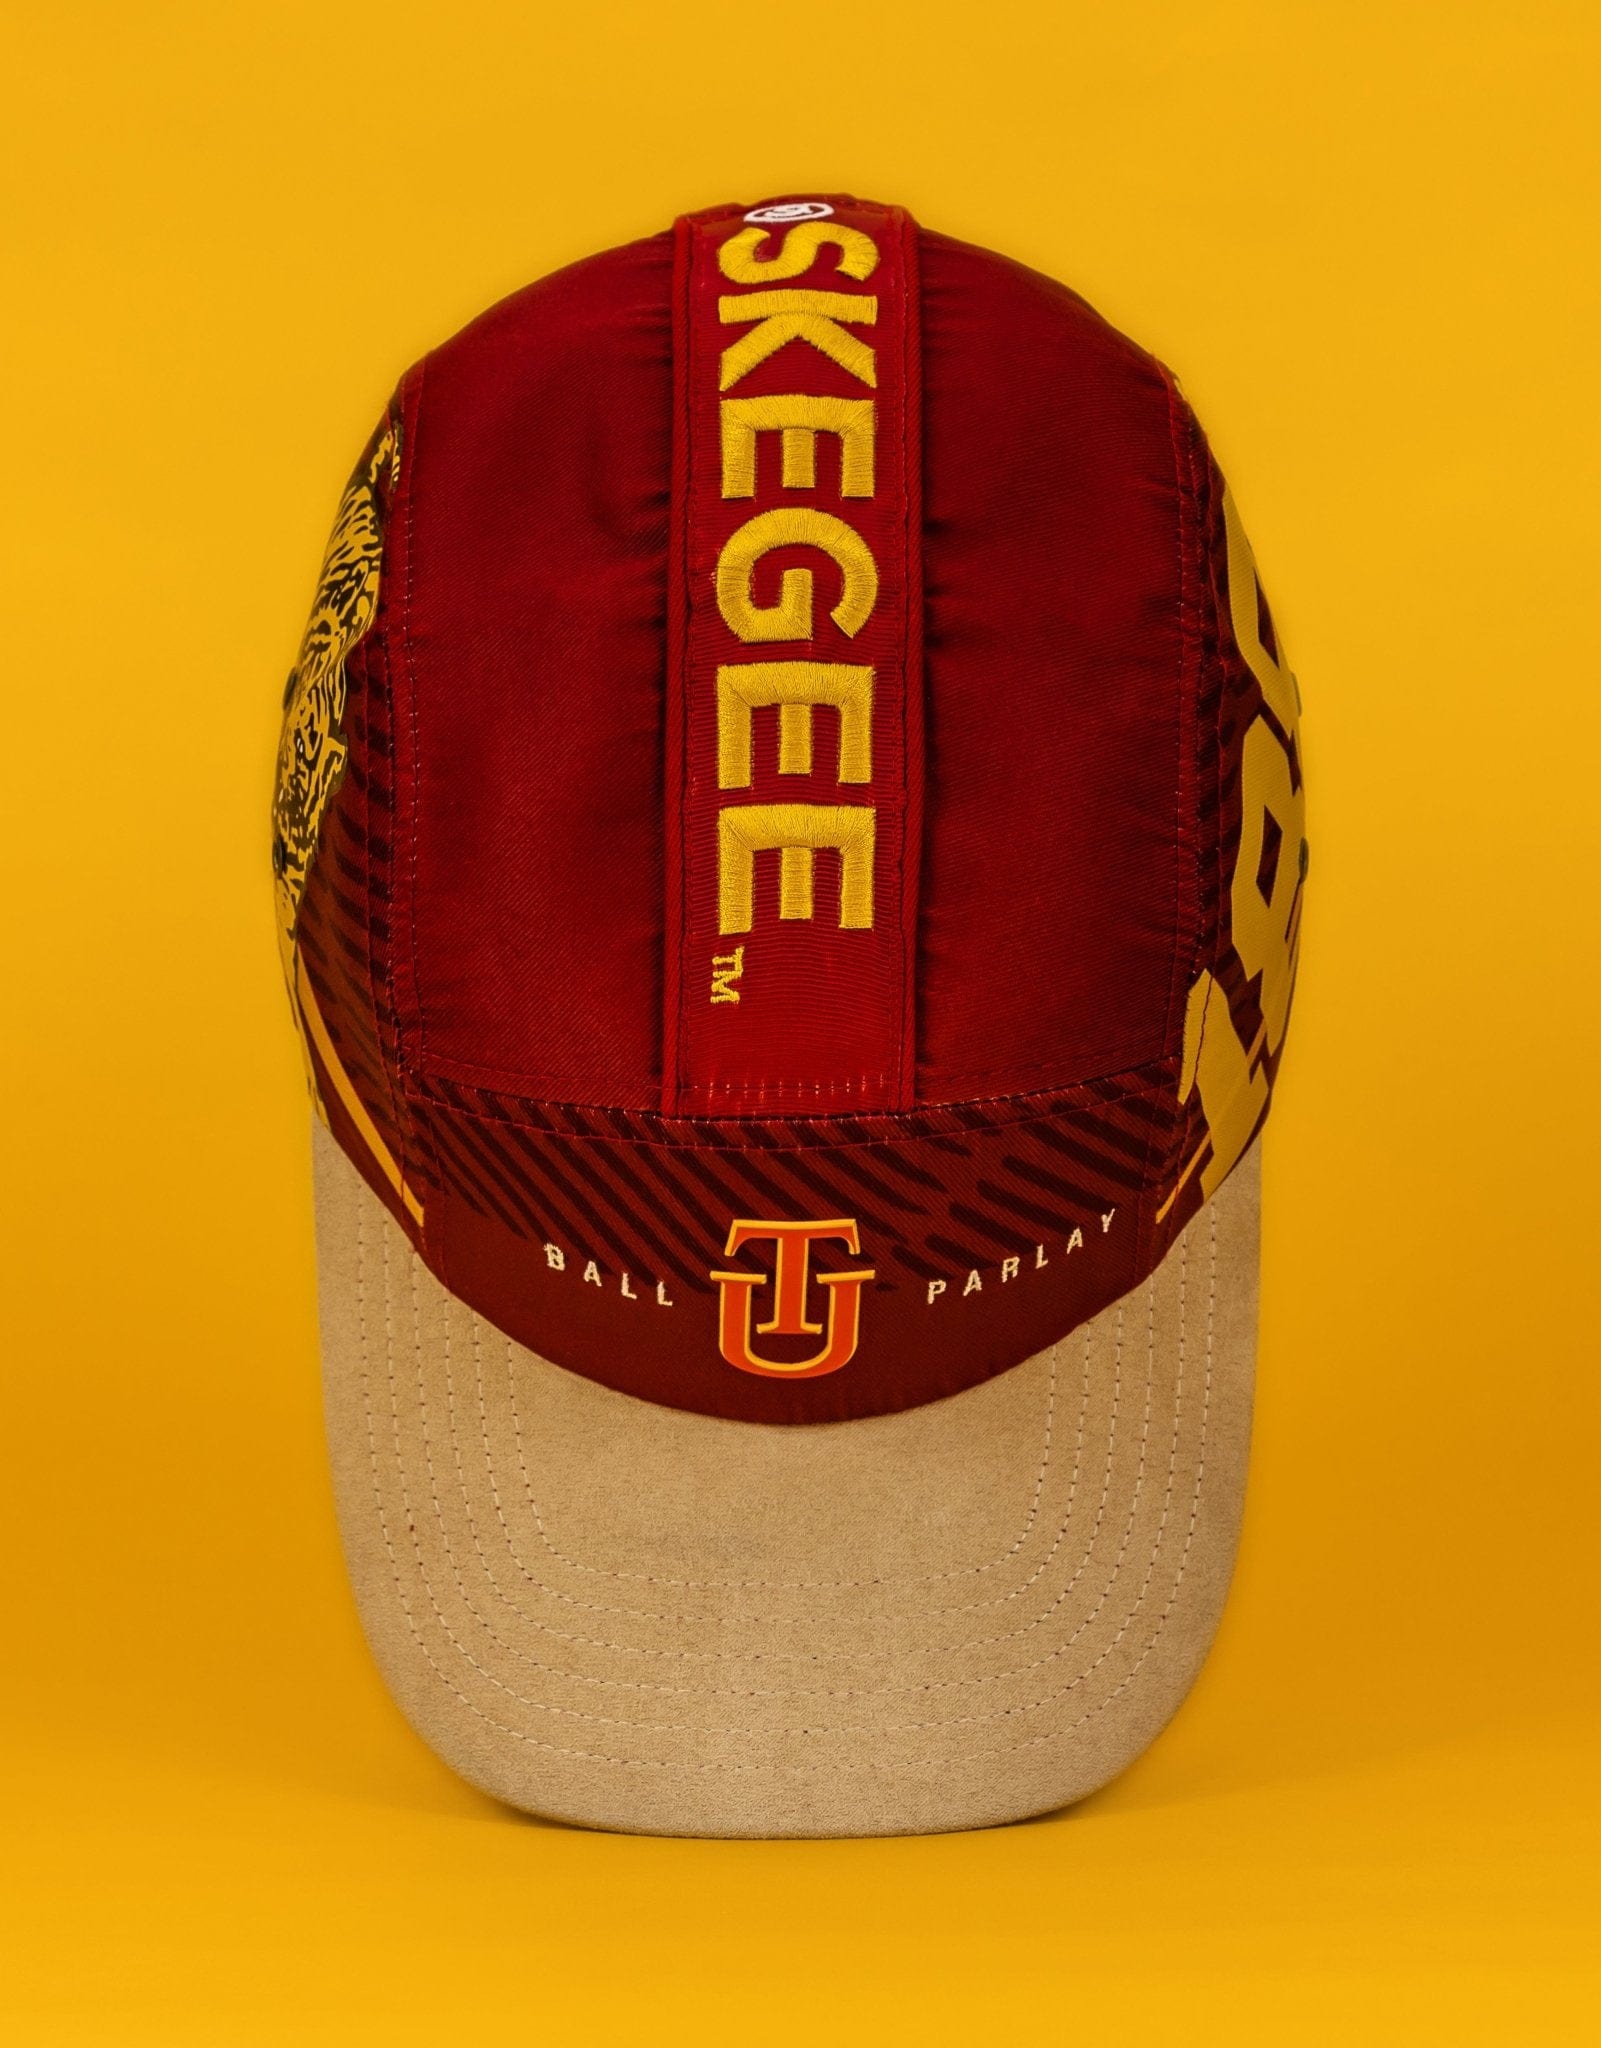 TheYard - Tuskegee University - HBCU Hat